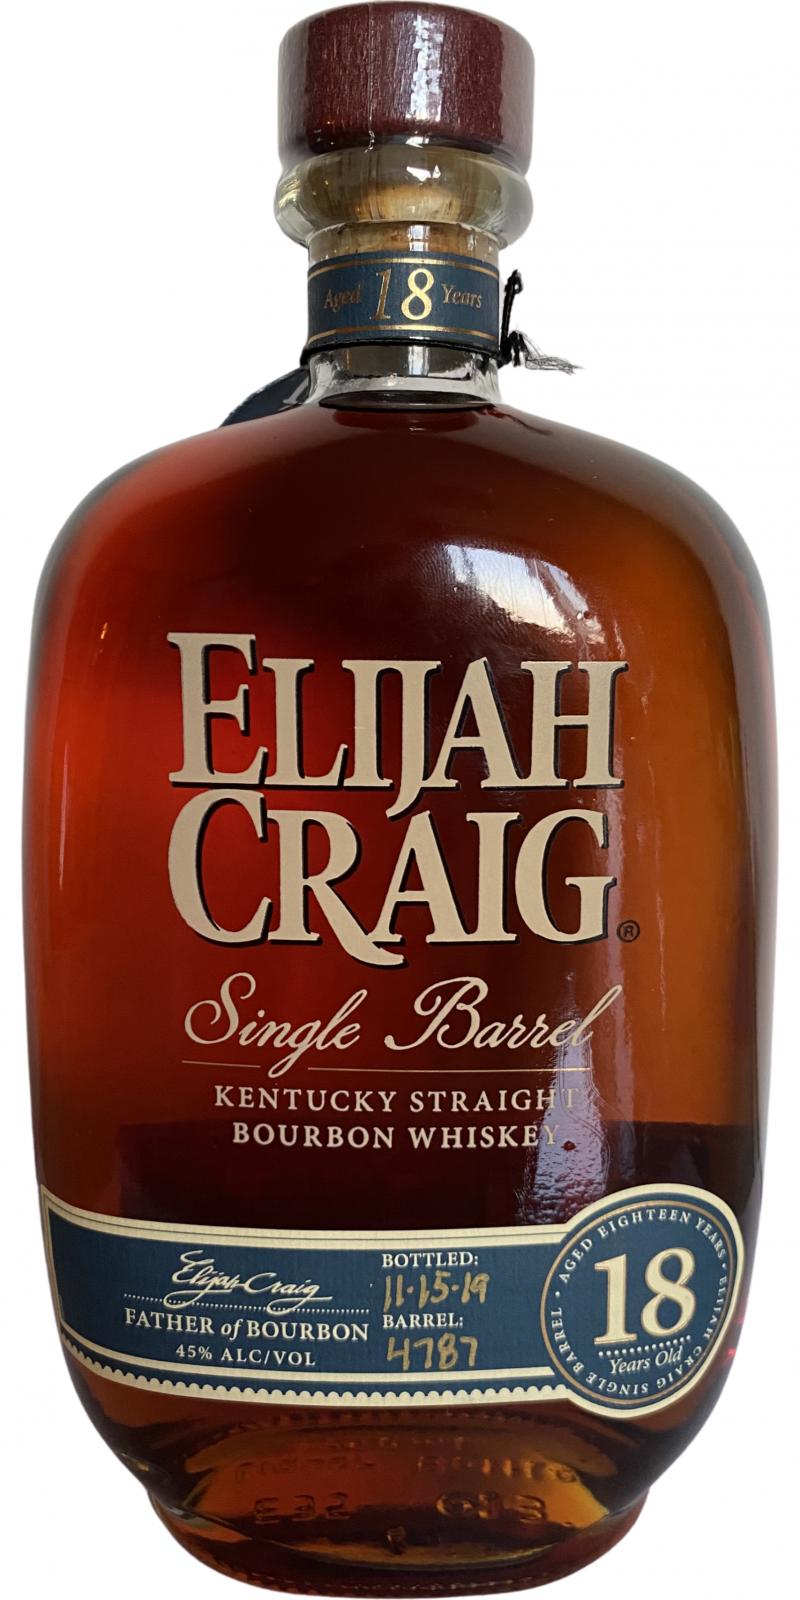 Elijah Craig Whiskybase Ratings and reviews for whisky